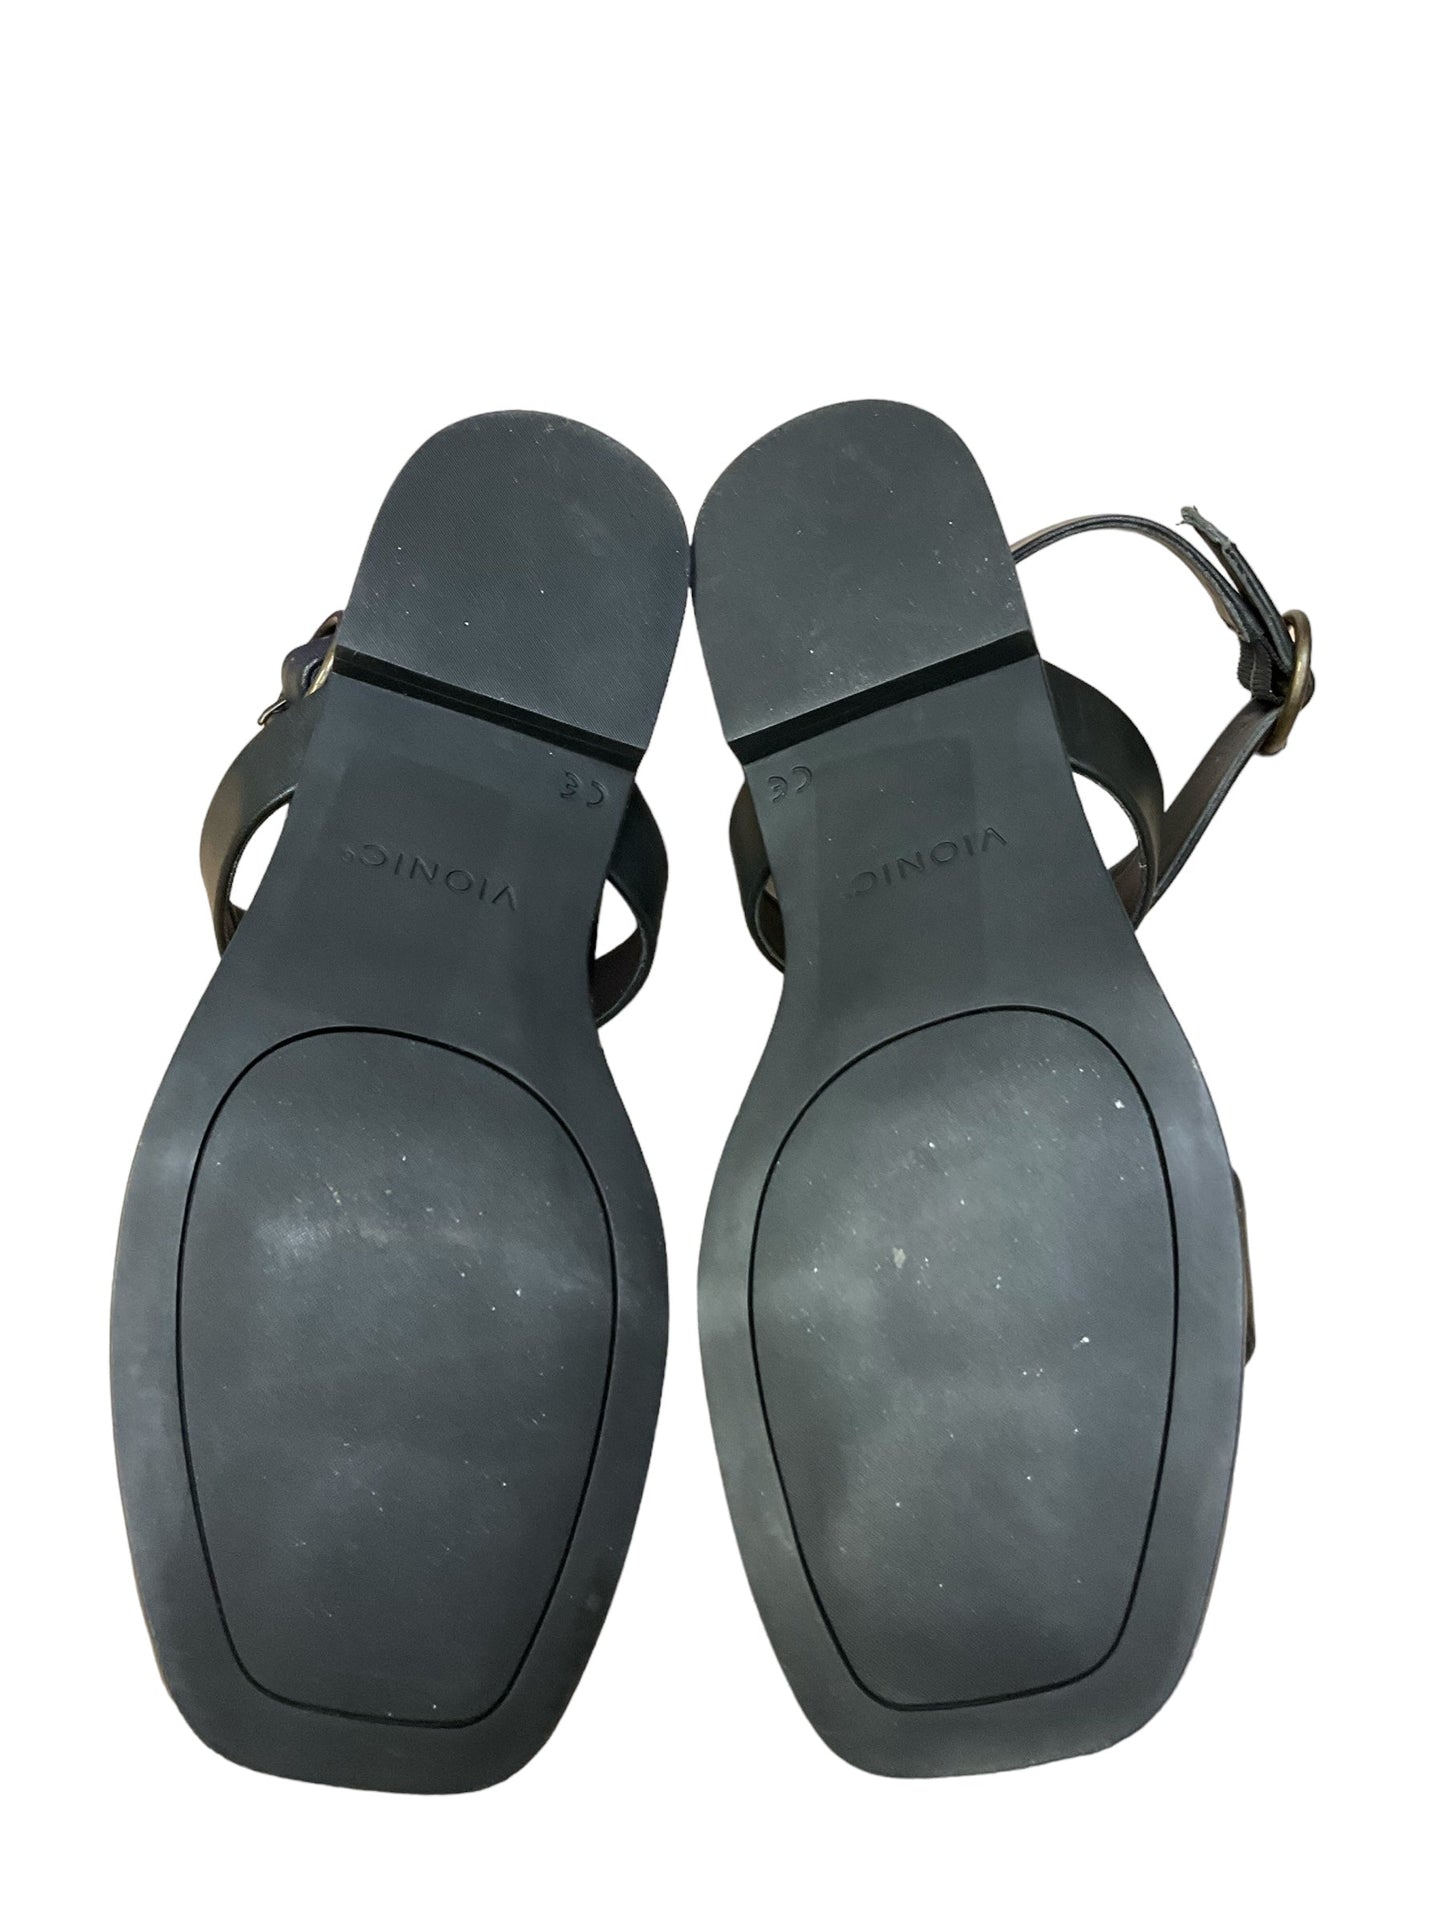 Black Sandals Flats Vionic, Size 8